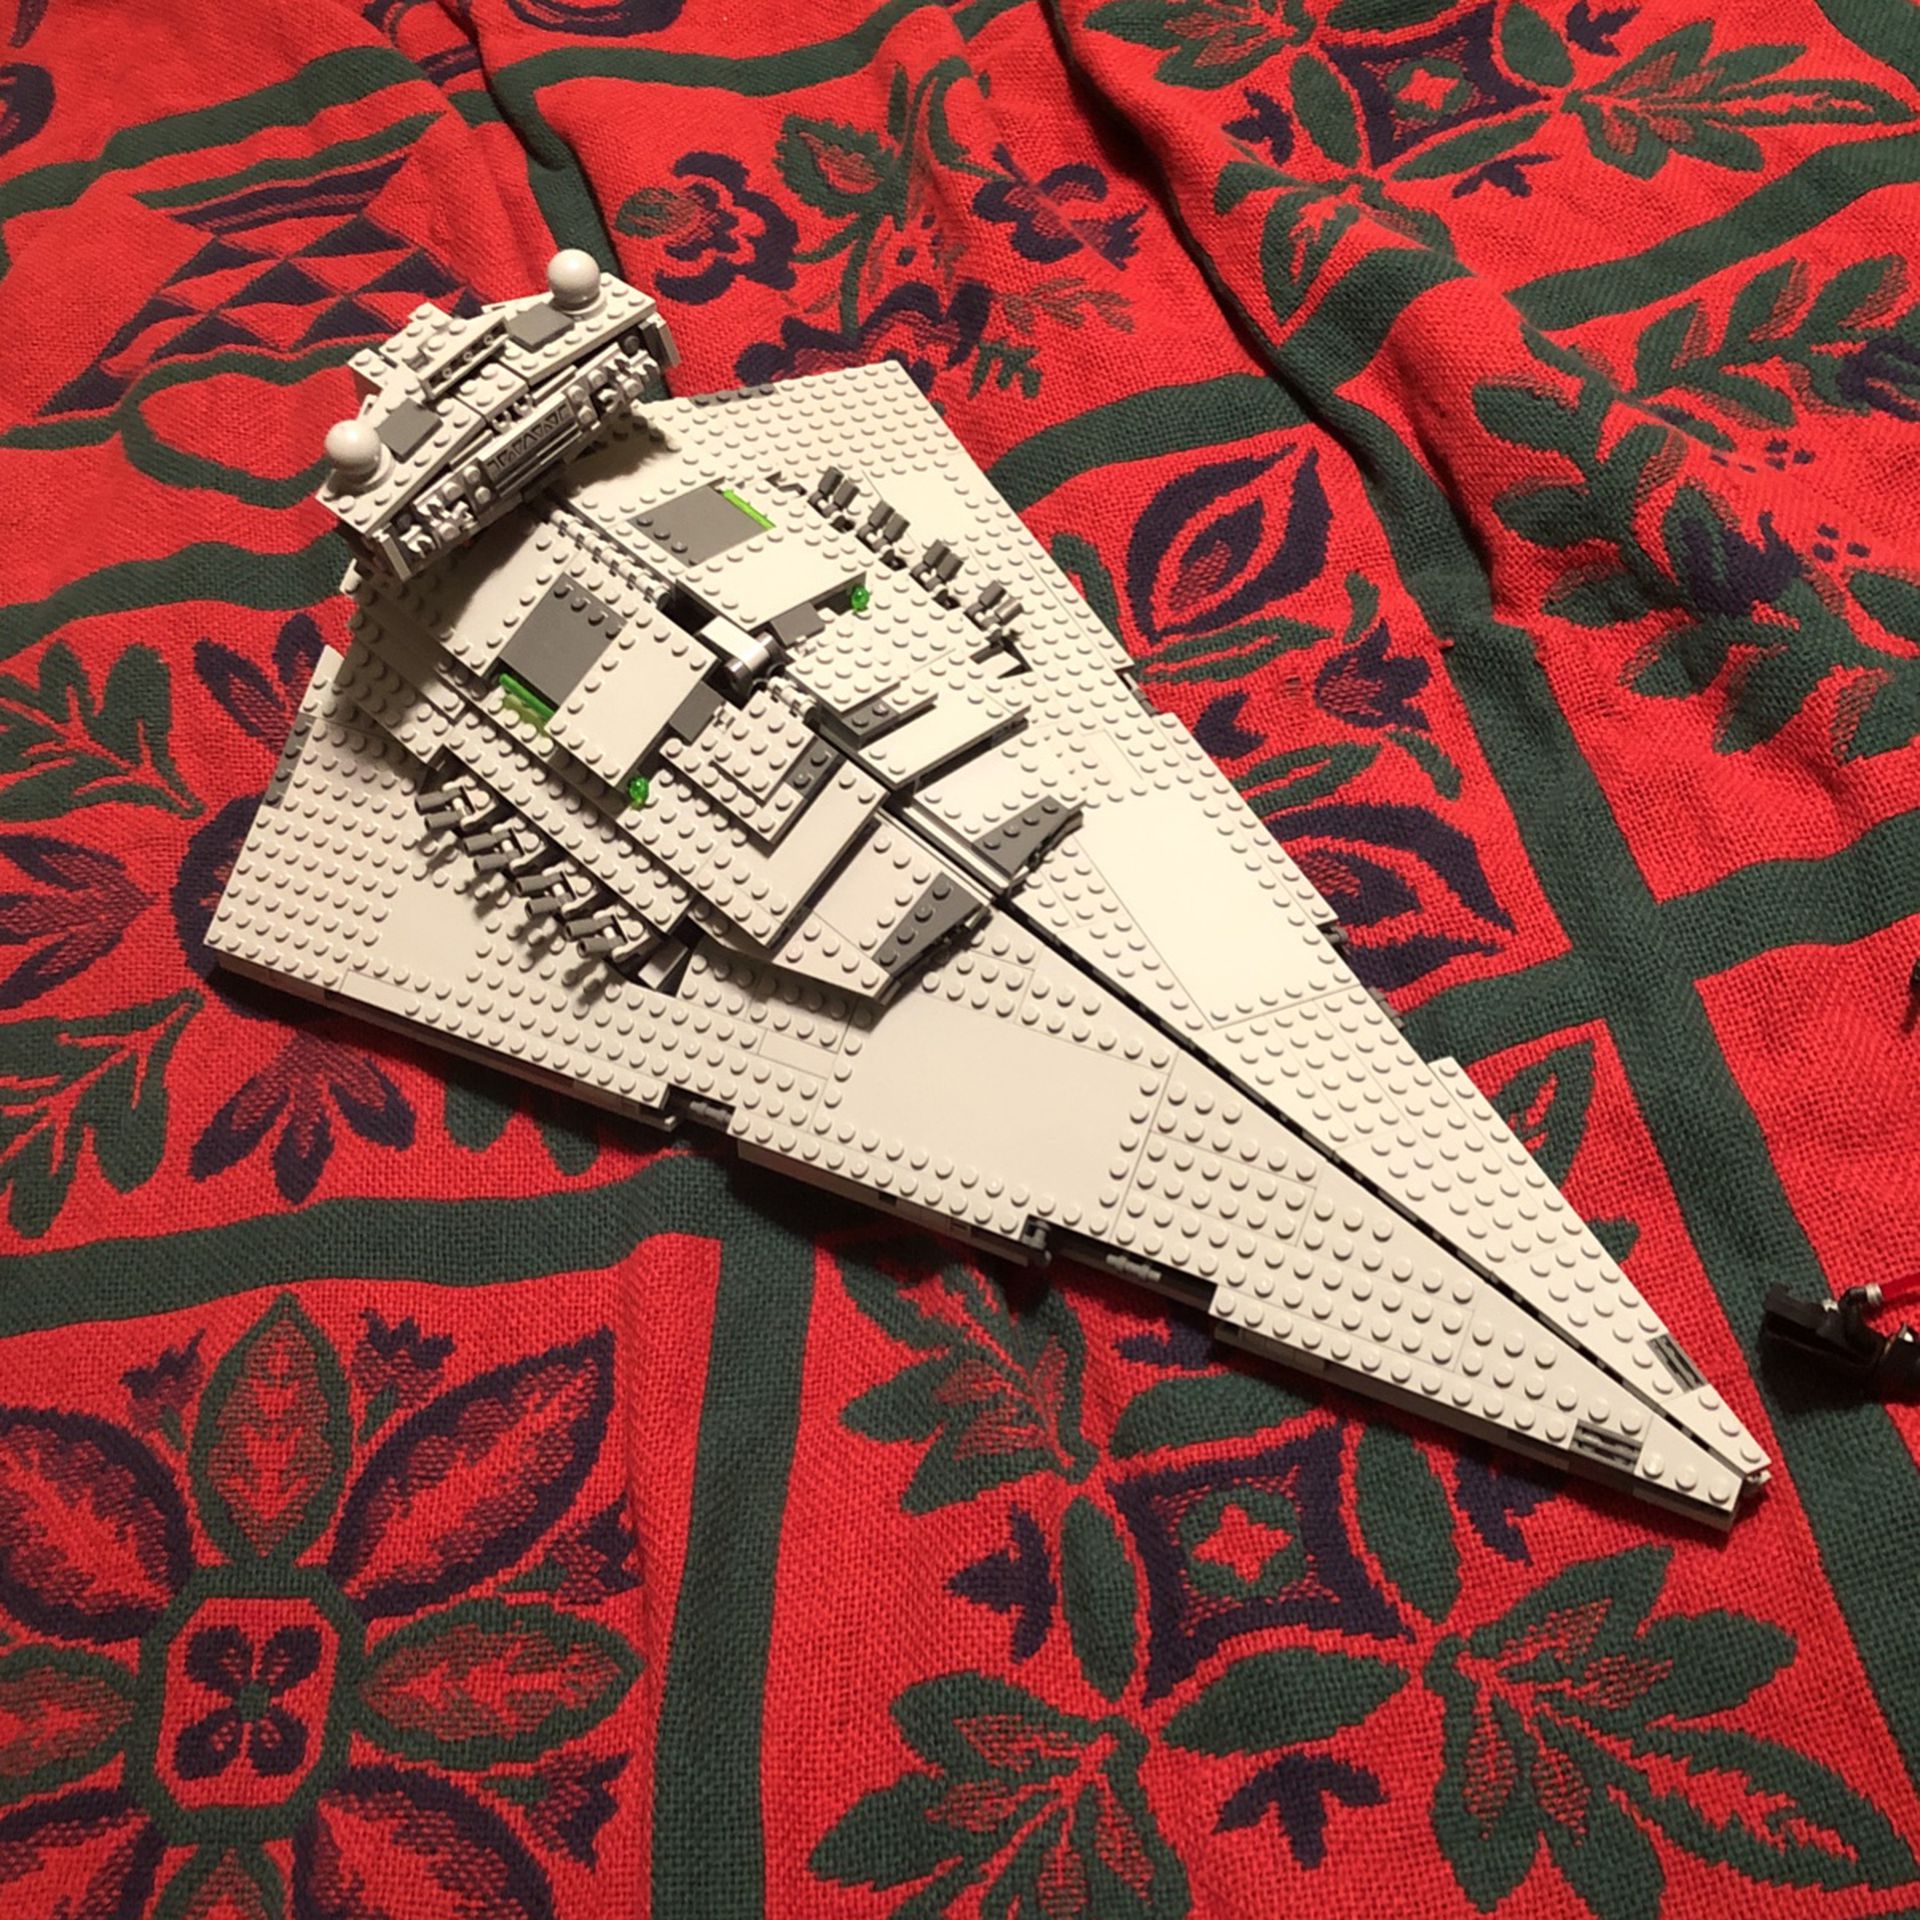 Lego Imperial Star Destroyer 75055